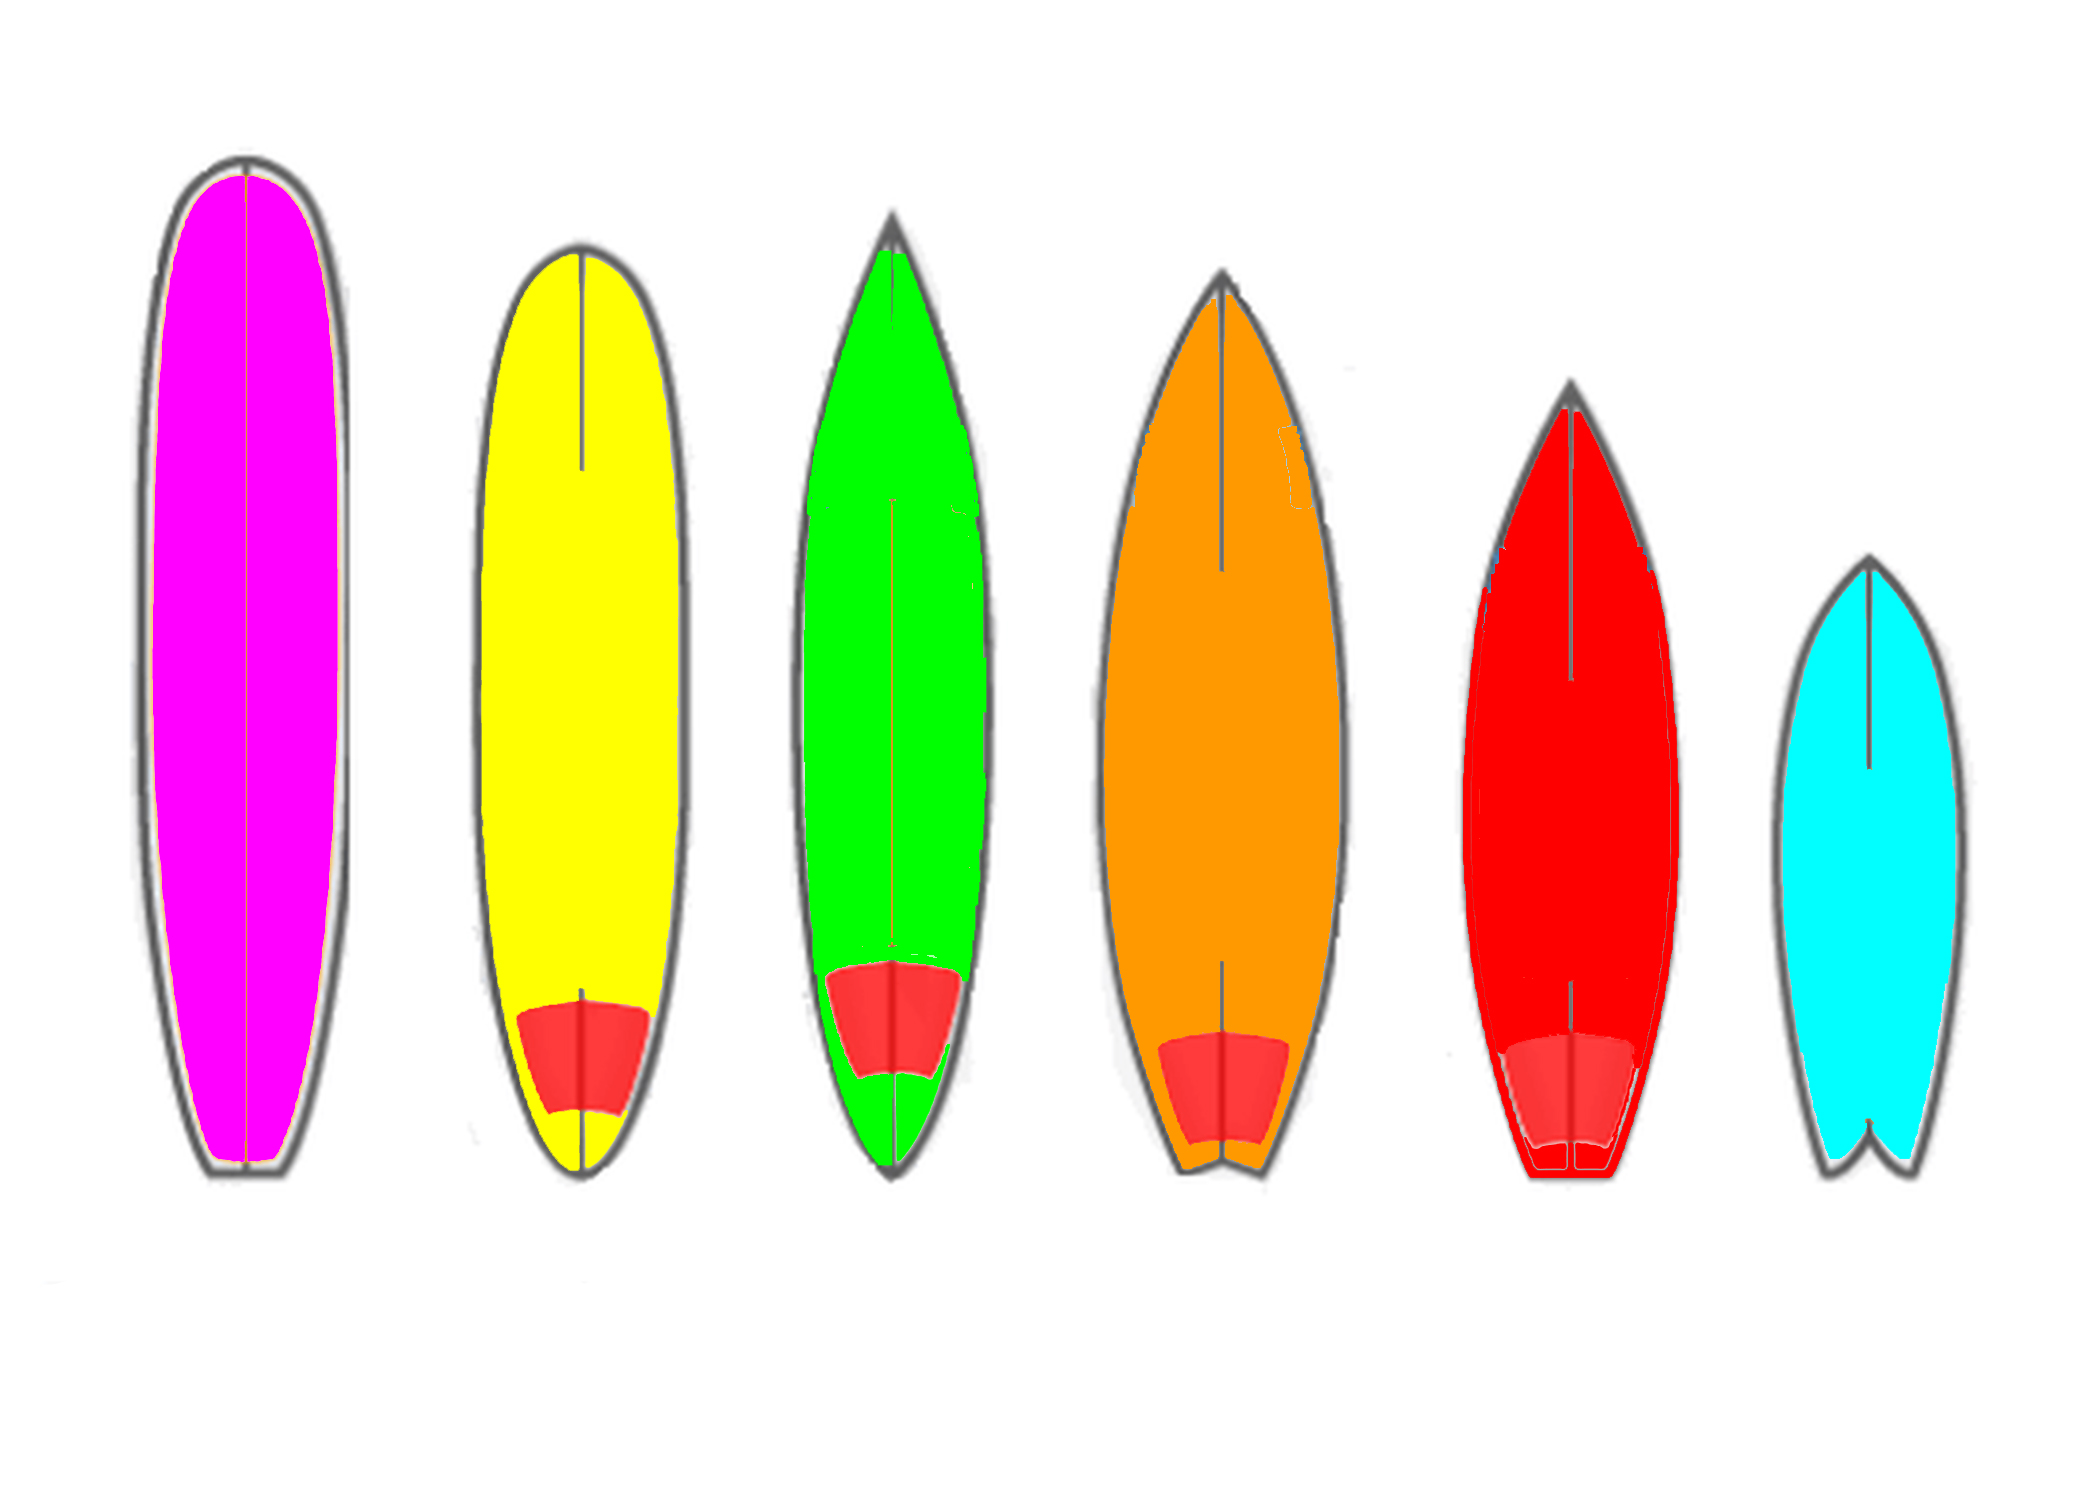 surfboard design